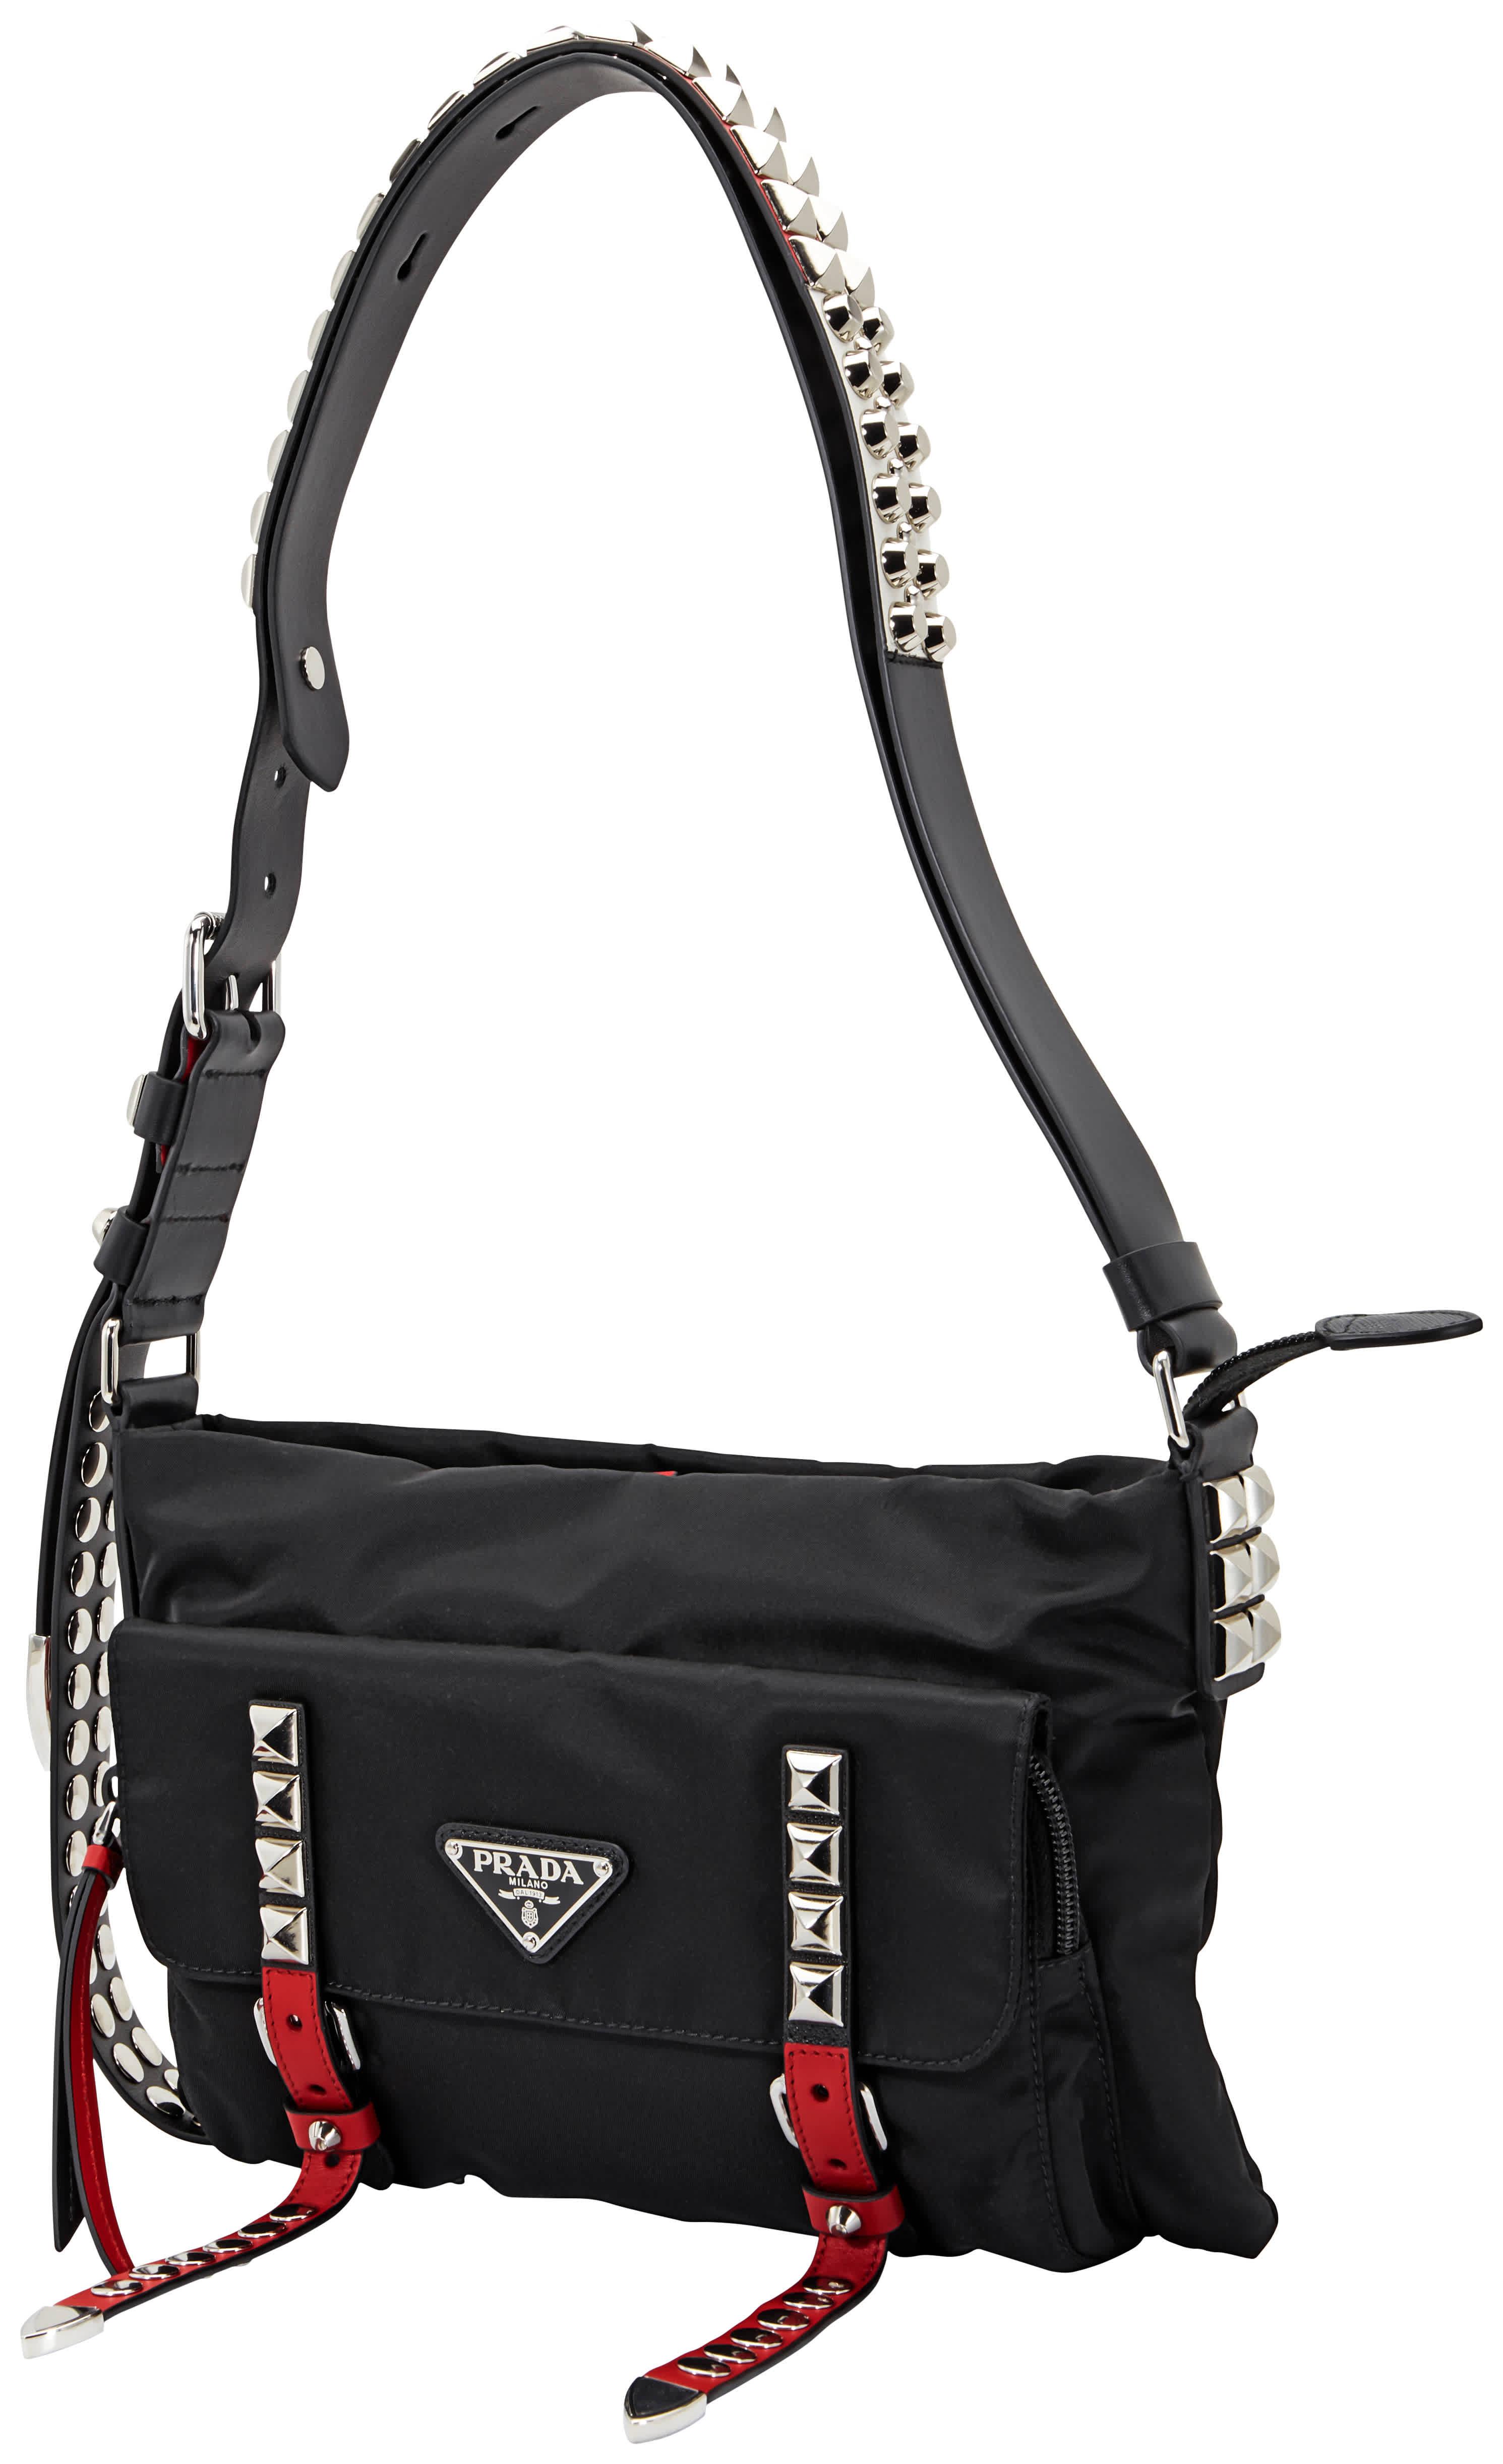 Prada Synthetic Studded Nylon Crossbody Bag Nero/fuoco in Black Red